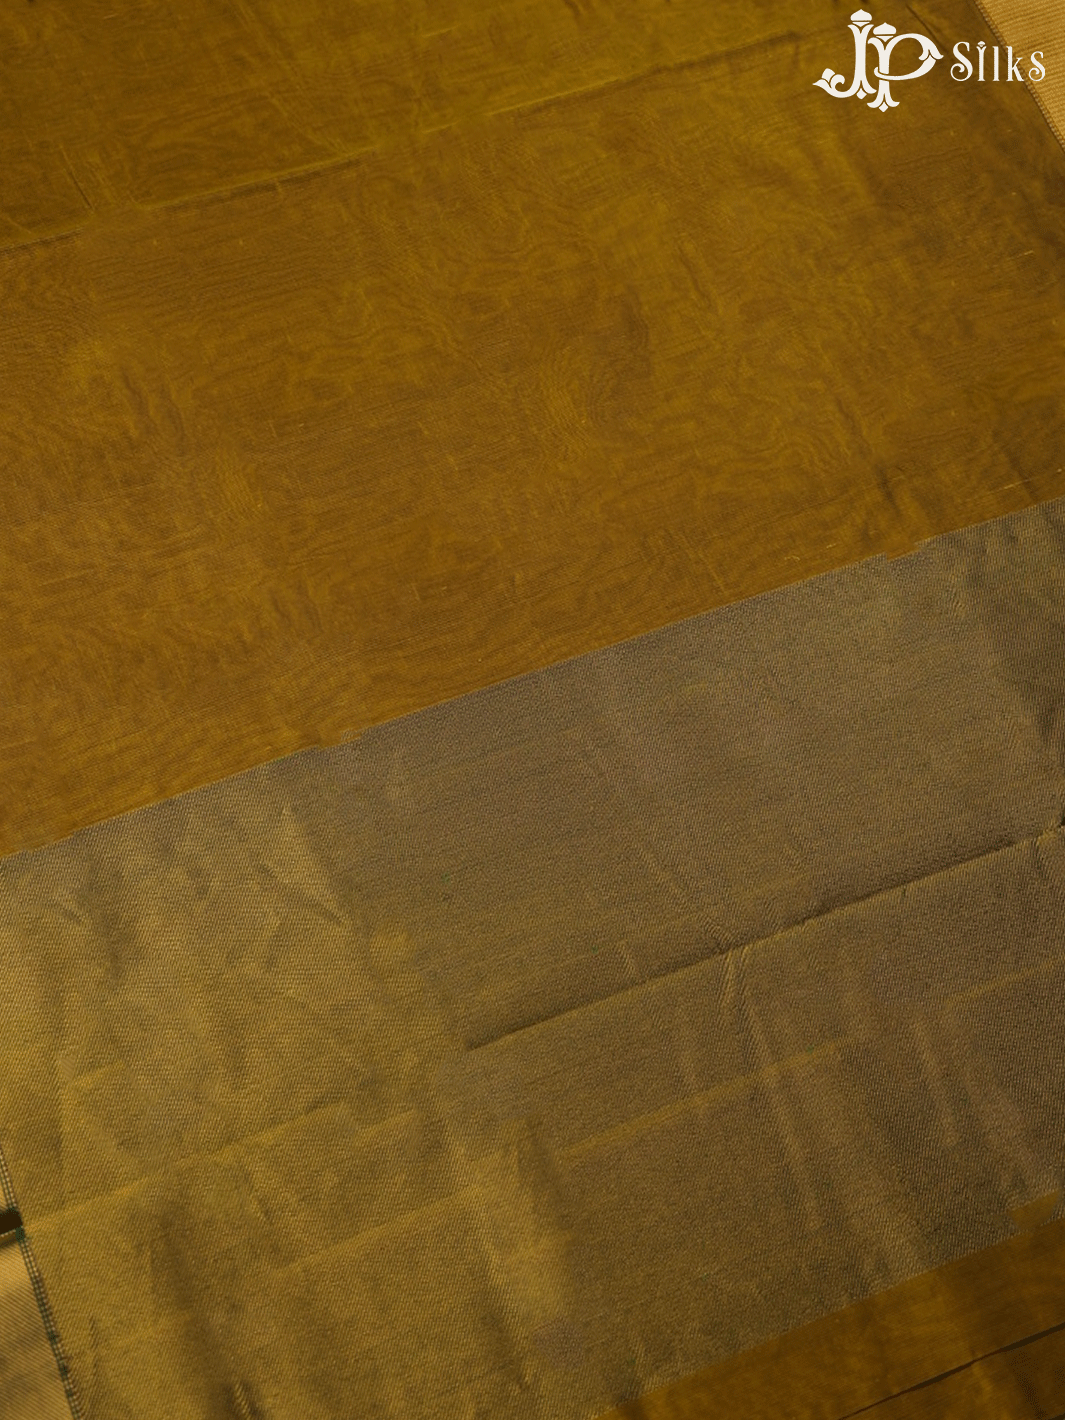 Yellow Silk Cotton Saree - F320 - View 3